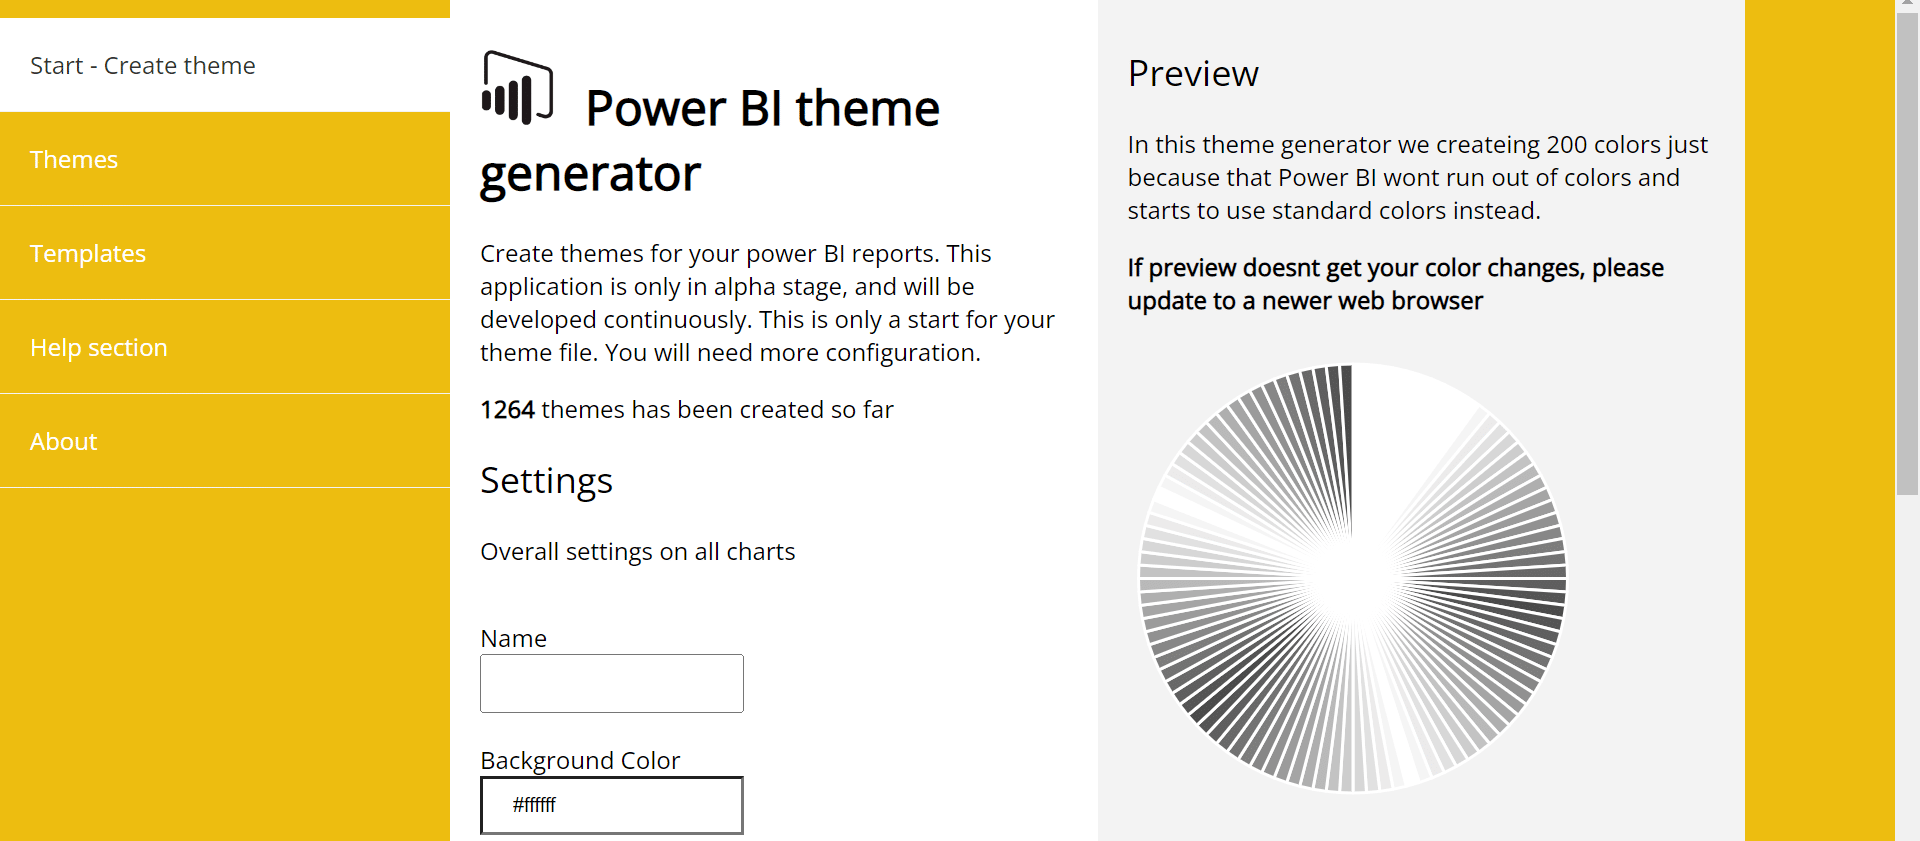 Using a Power BI theme generator 